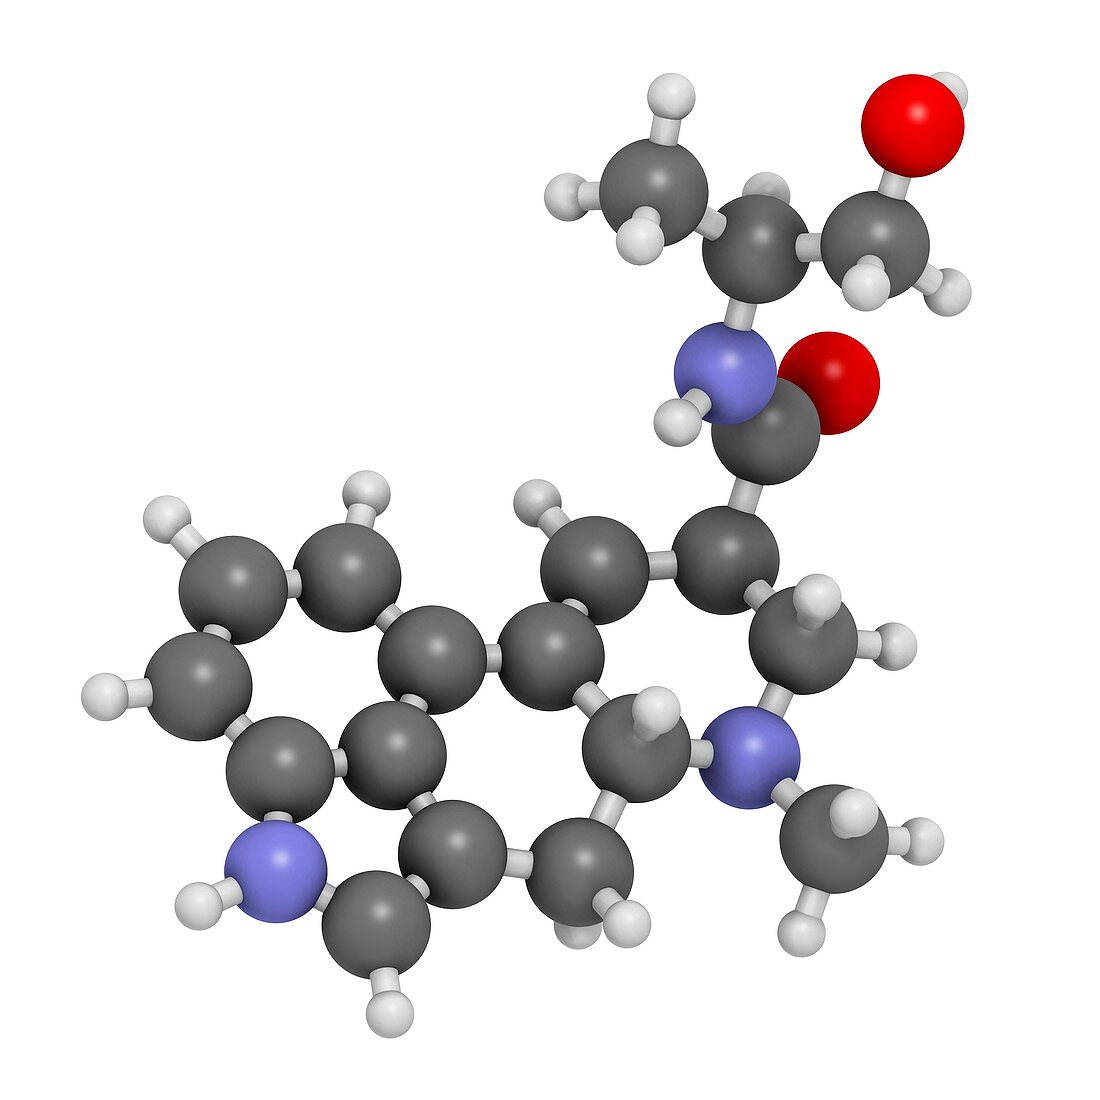 Ergometrine drug molecule